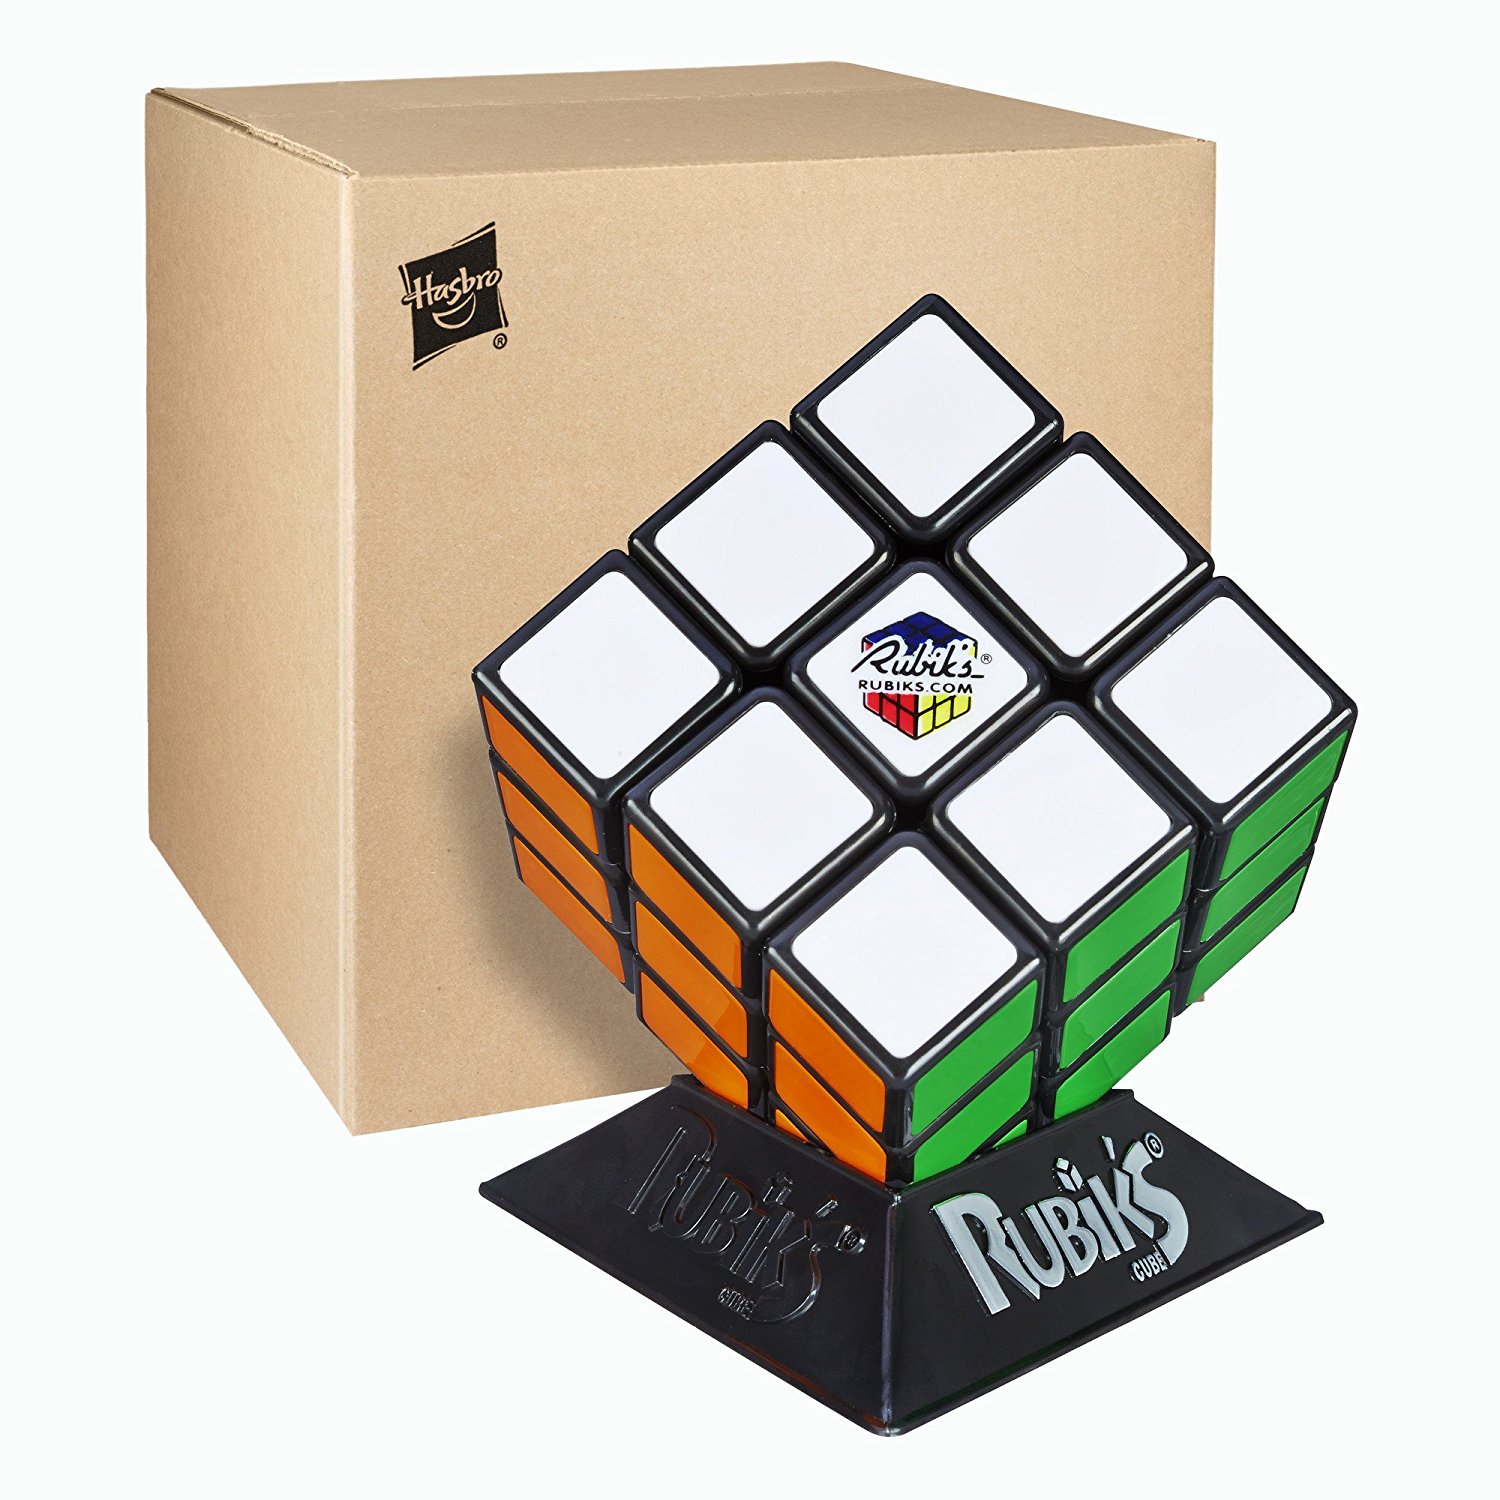 Amazon.com: Hasbro Rubik's Cube: Toys & Games